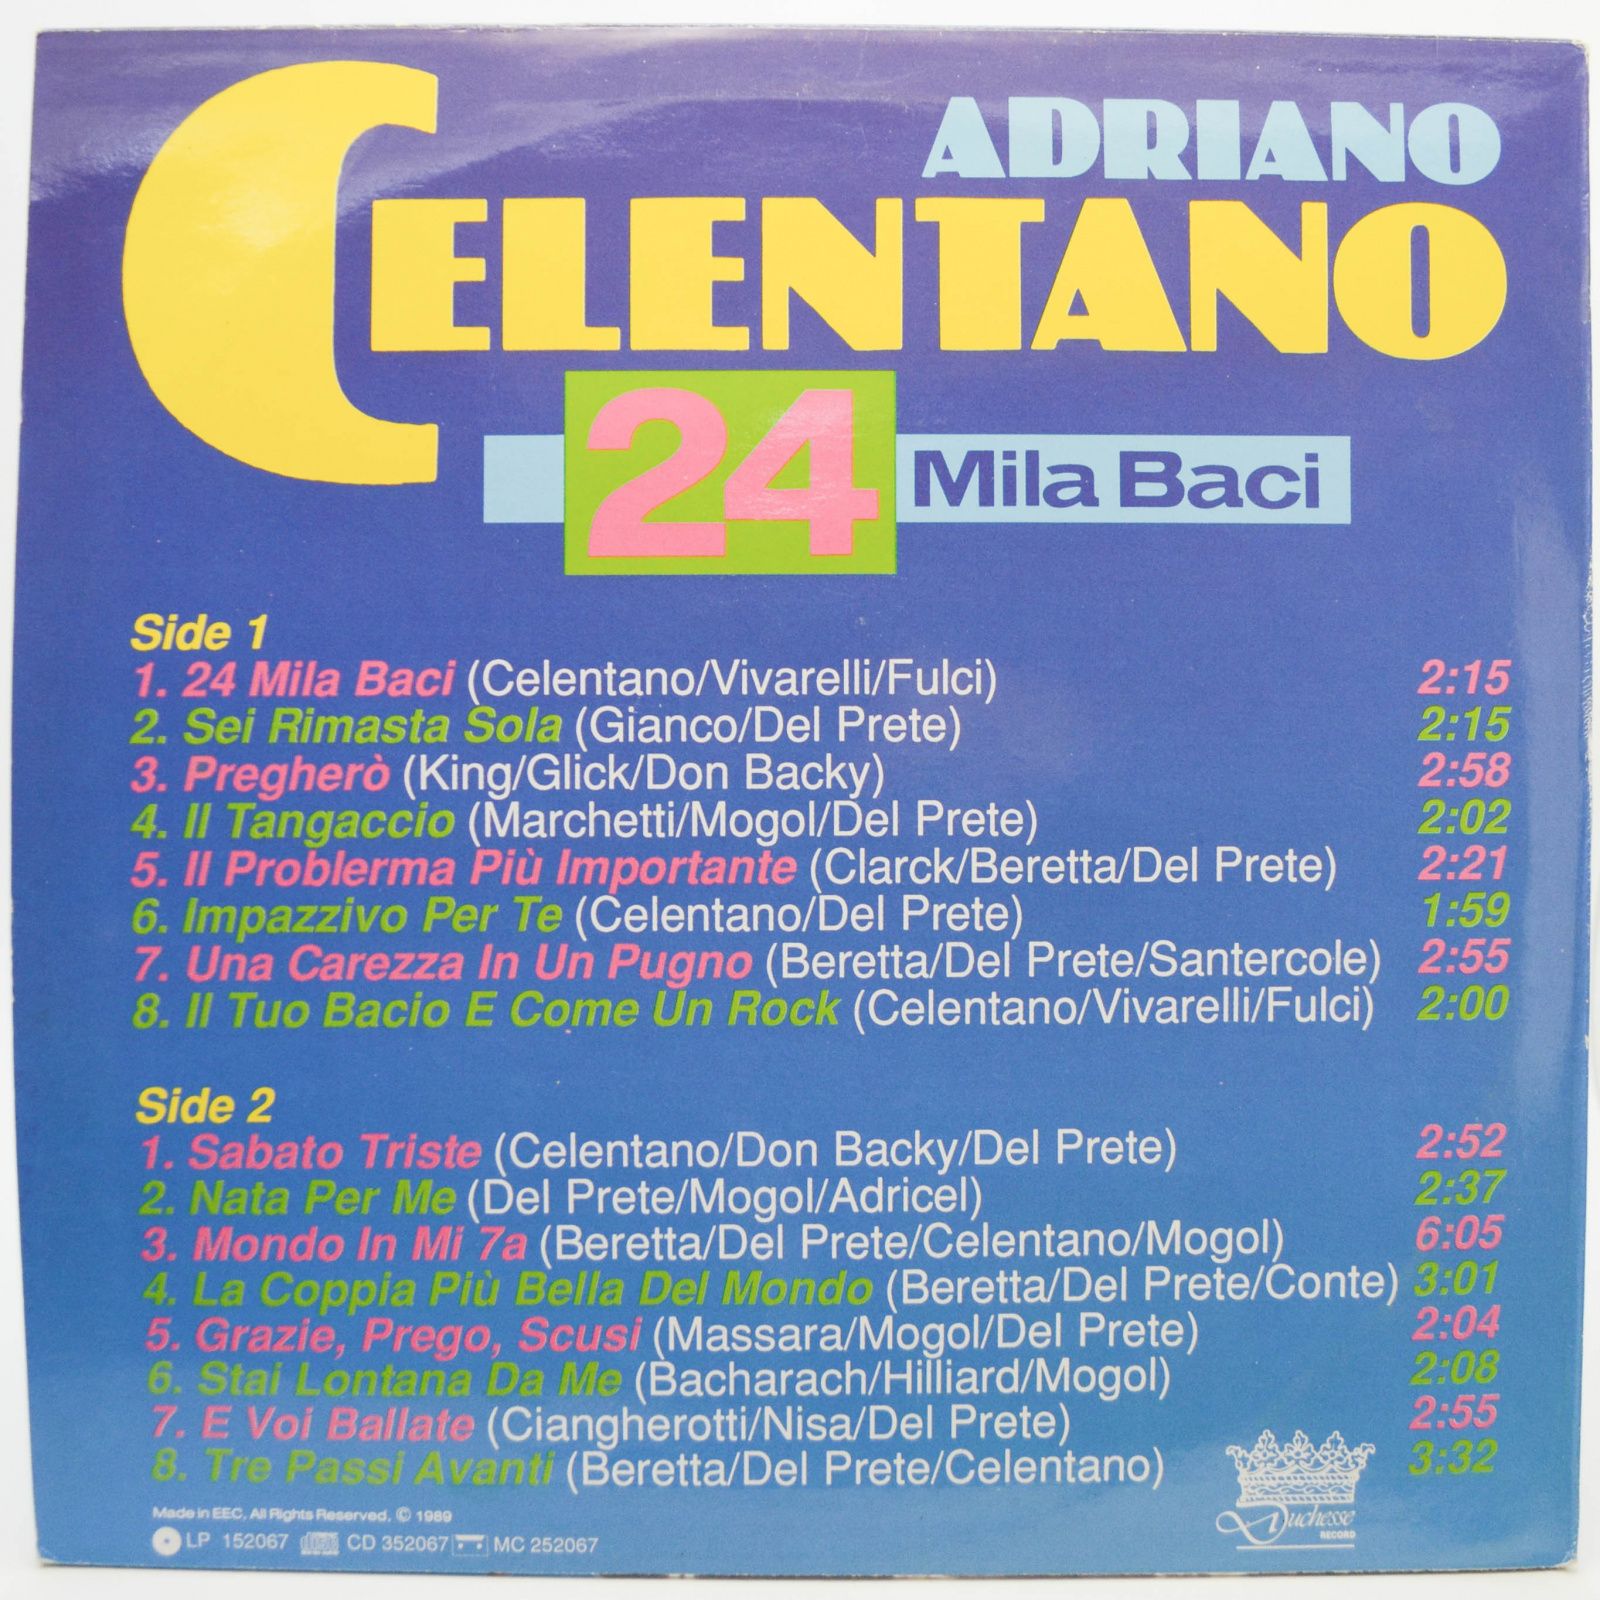 Adriano Celentano — 24 Mila Baci, 1989